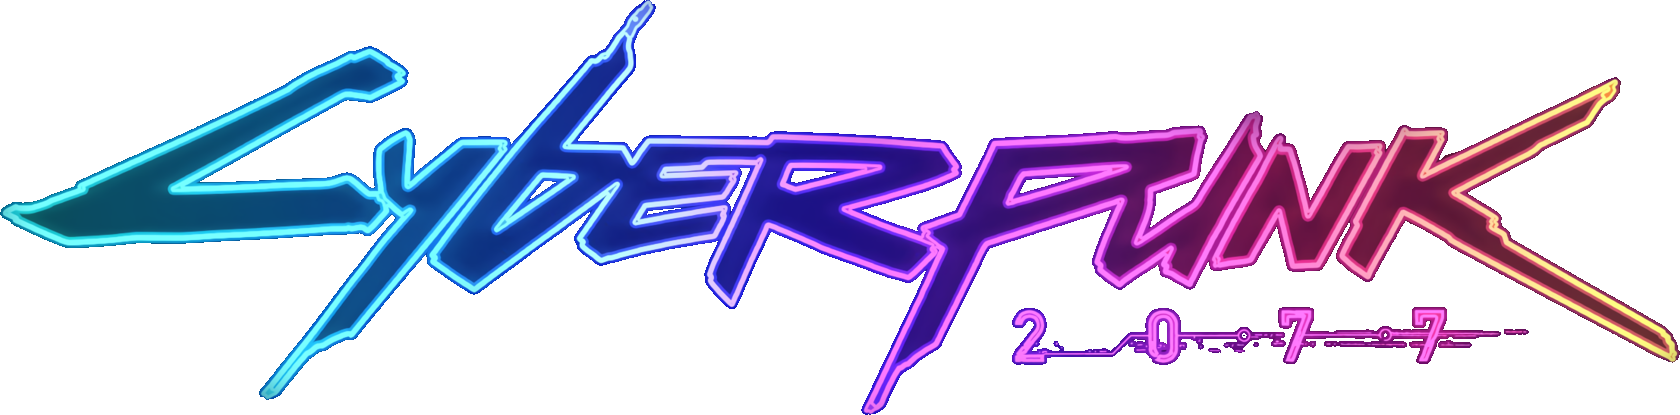 Cyberpunk Logo - Free Vectors & PSDs to Download